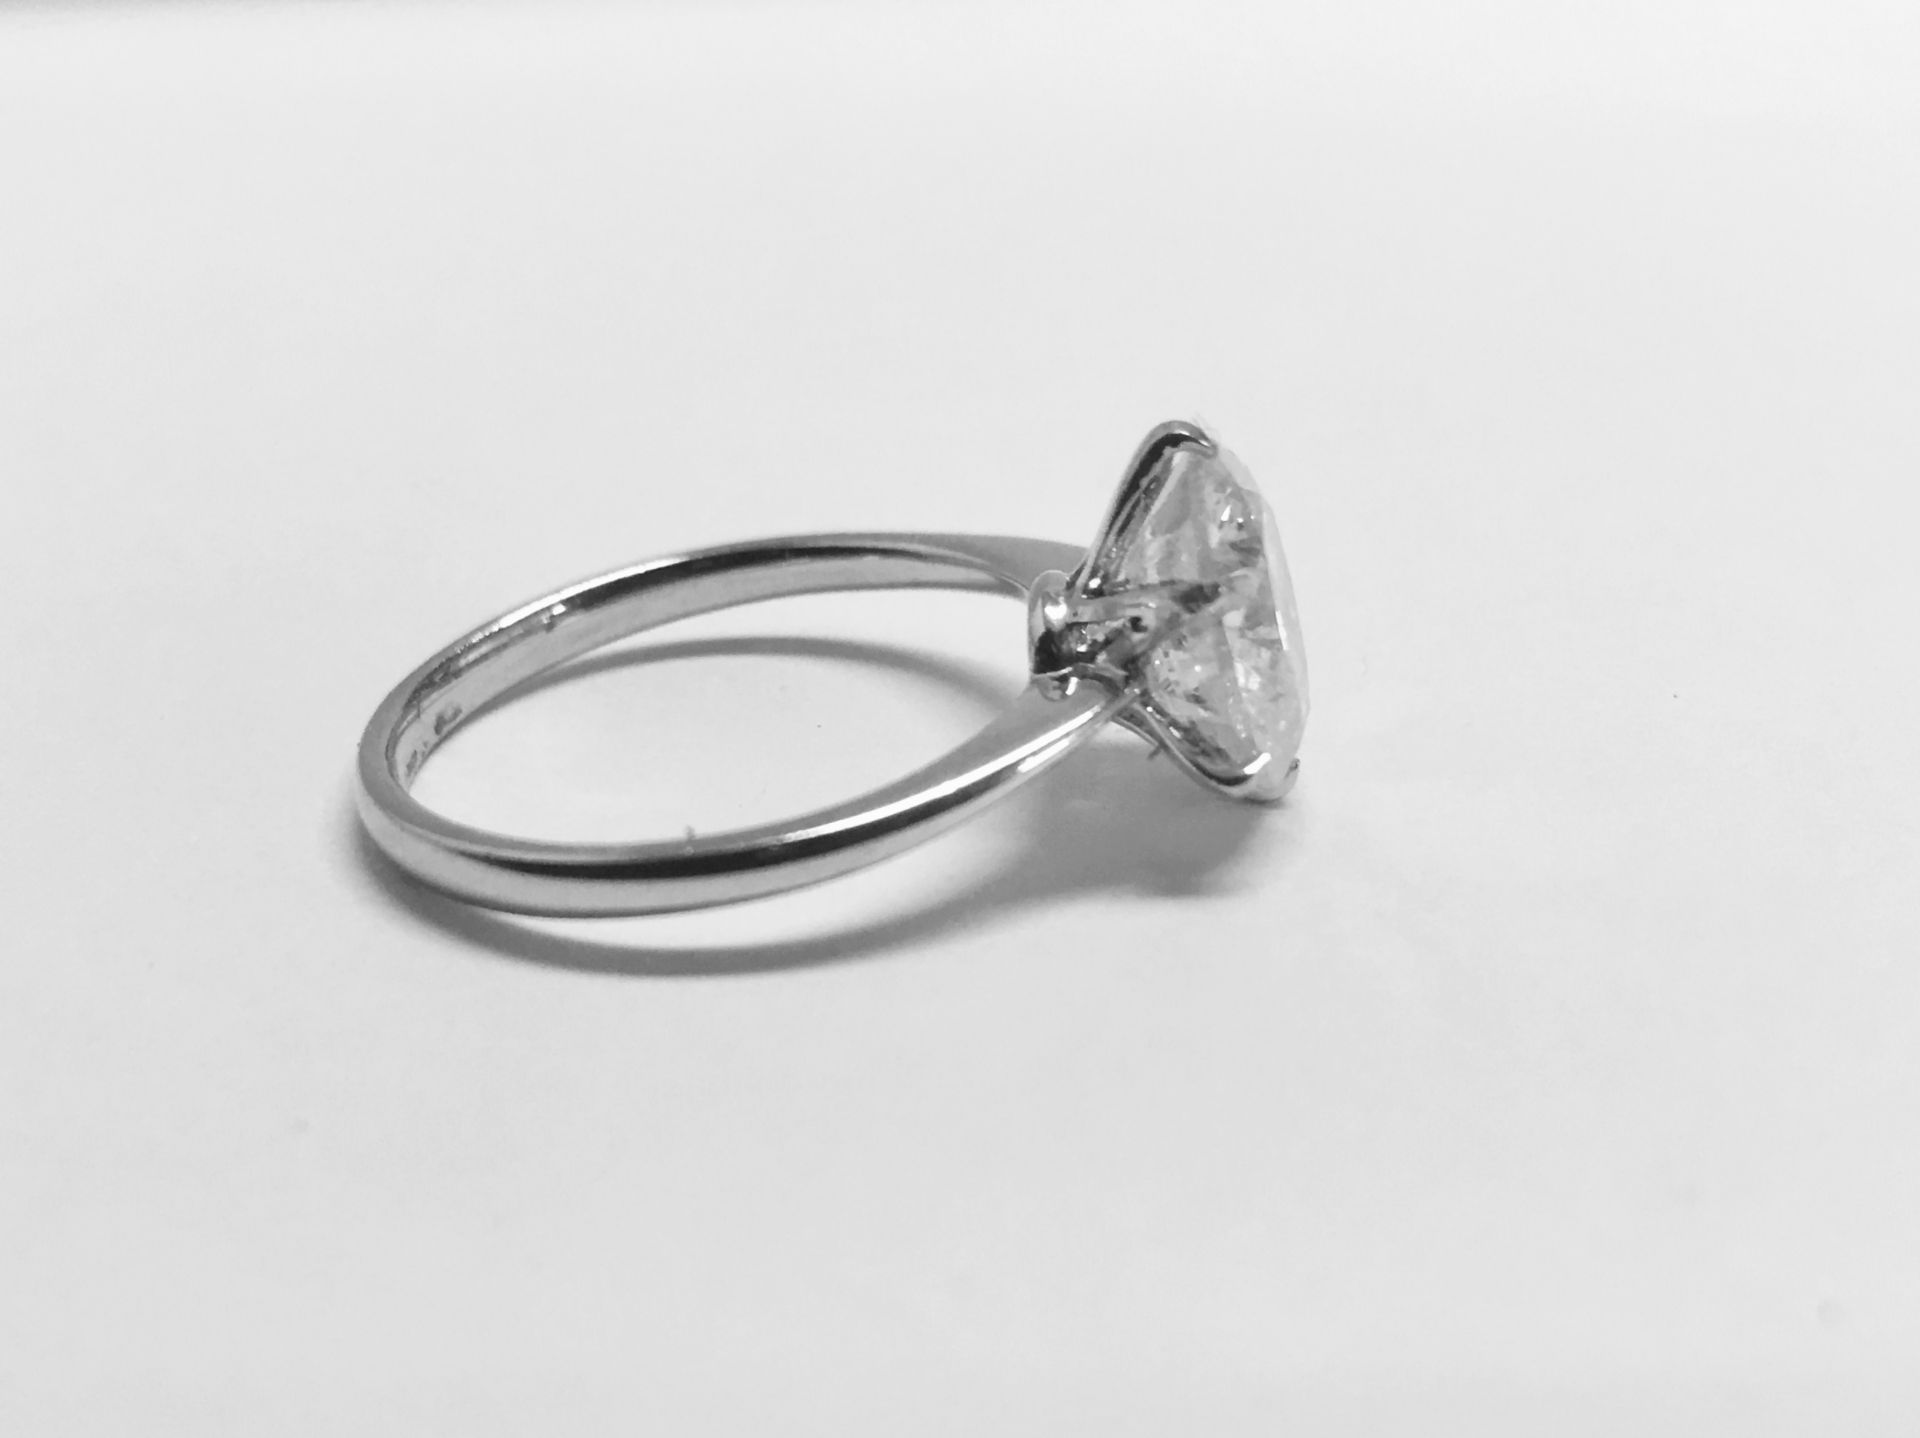 2.08ct brilliant cut natural diamond ,H colour i2 clarity(clarity enhanced ),6 claw platinum setting - Image 4 of 4